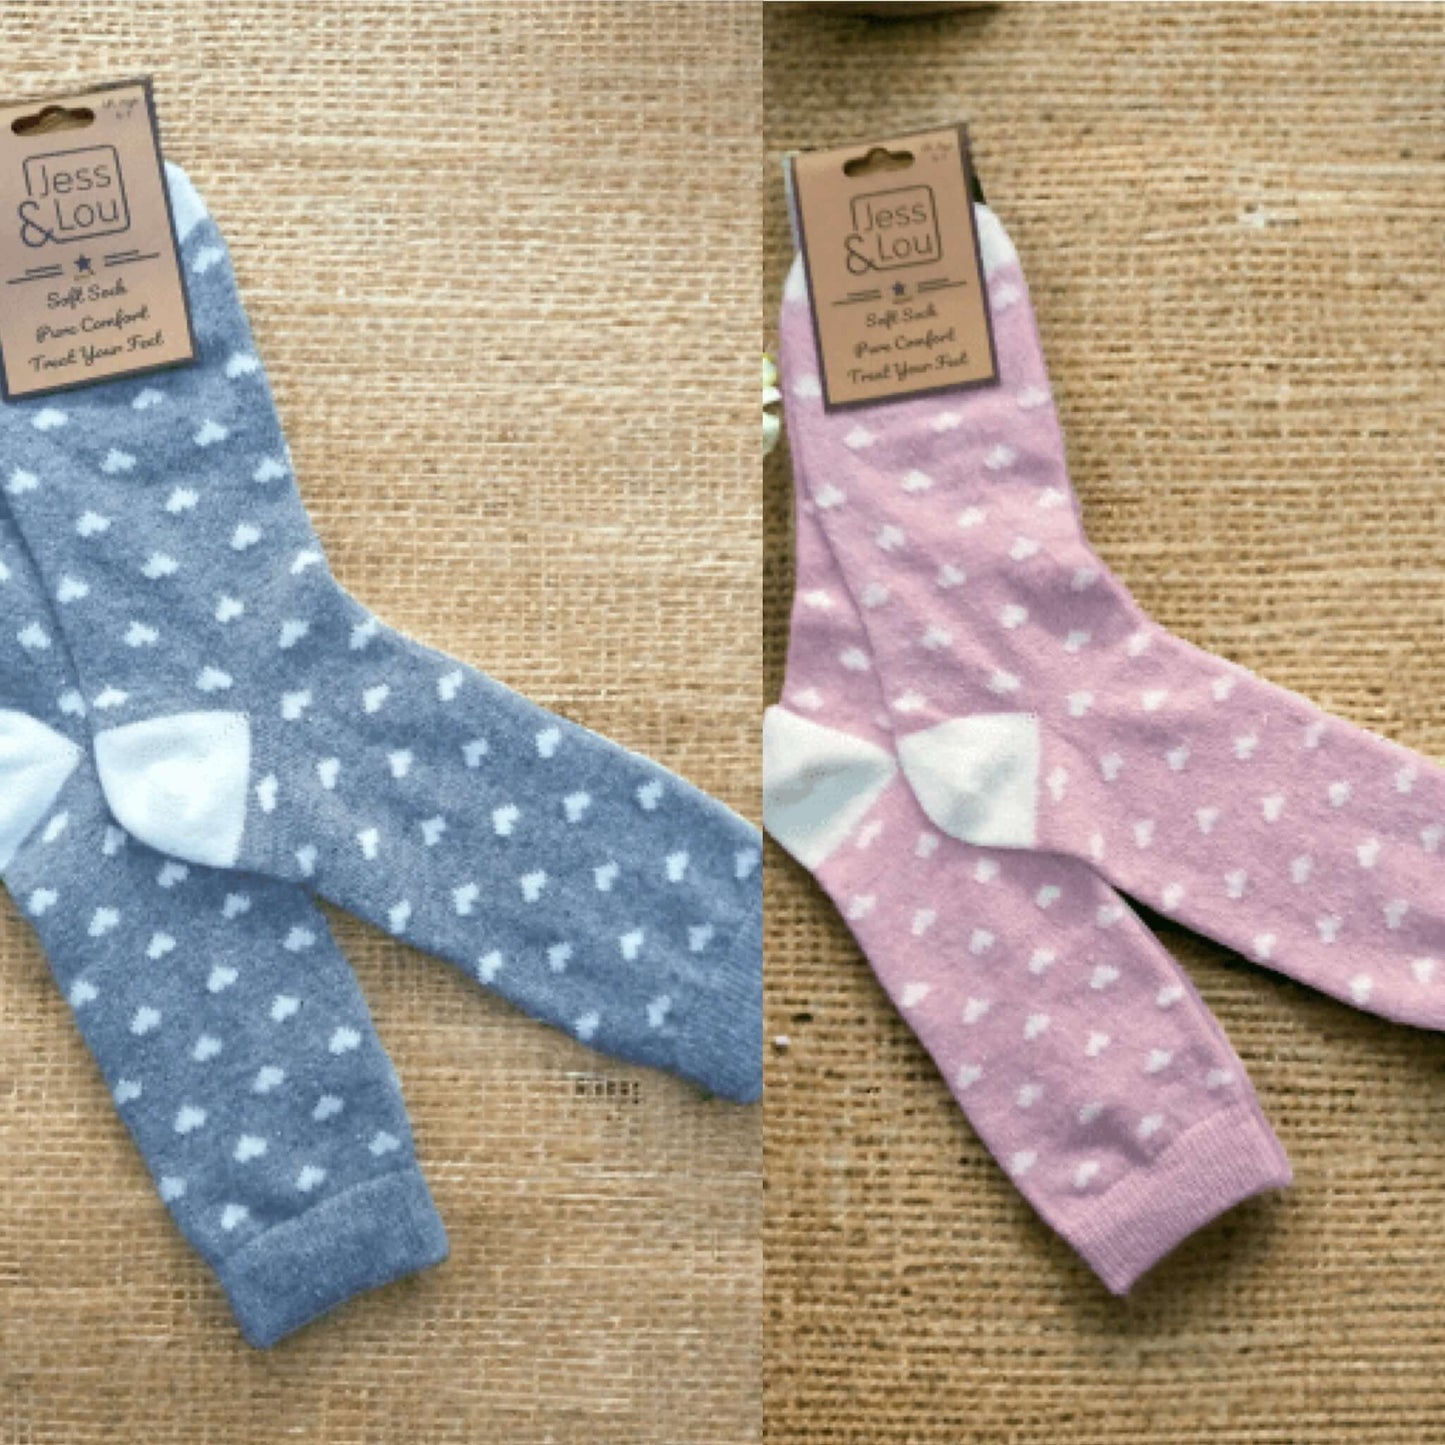 Jess & Lou - Rib Soft Spring Socks with Small Hearts